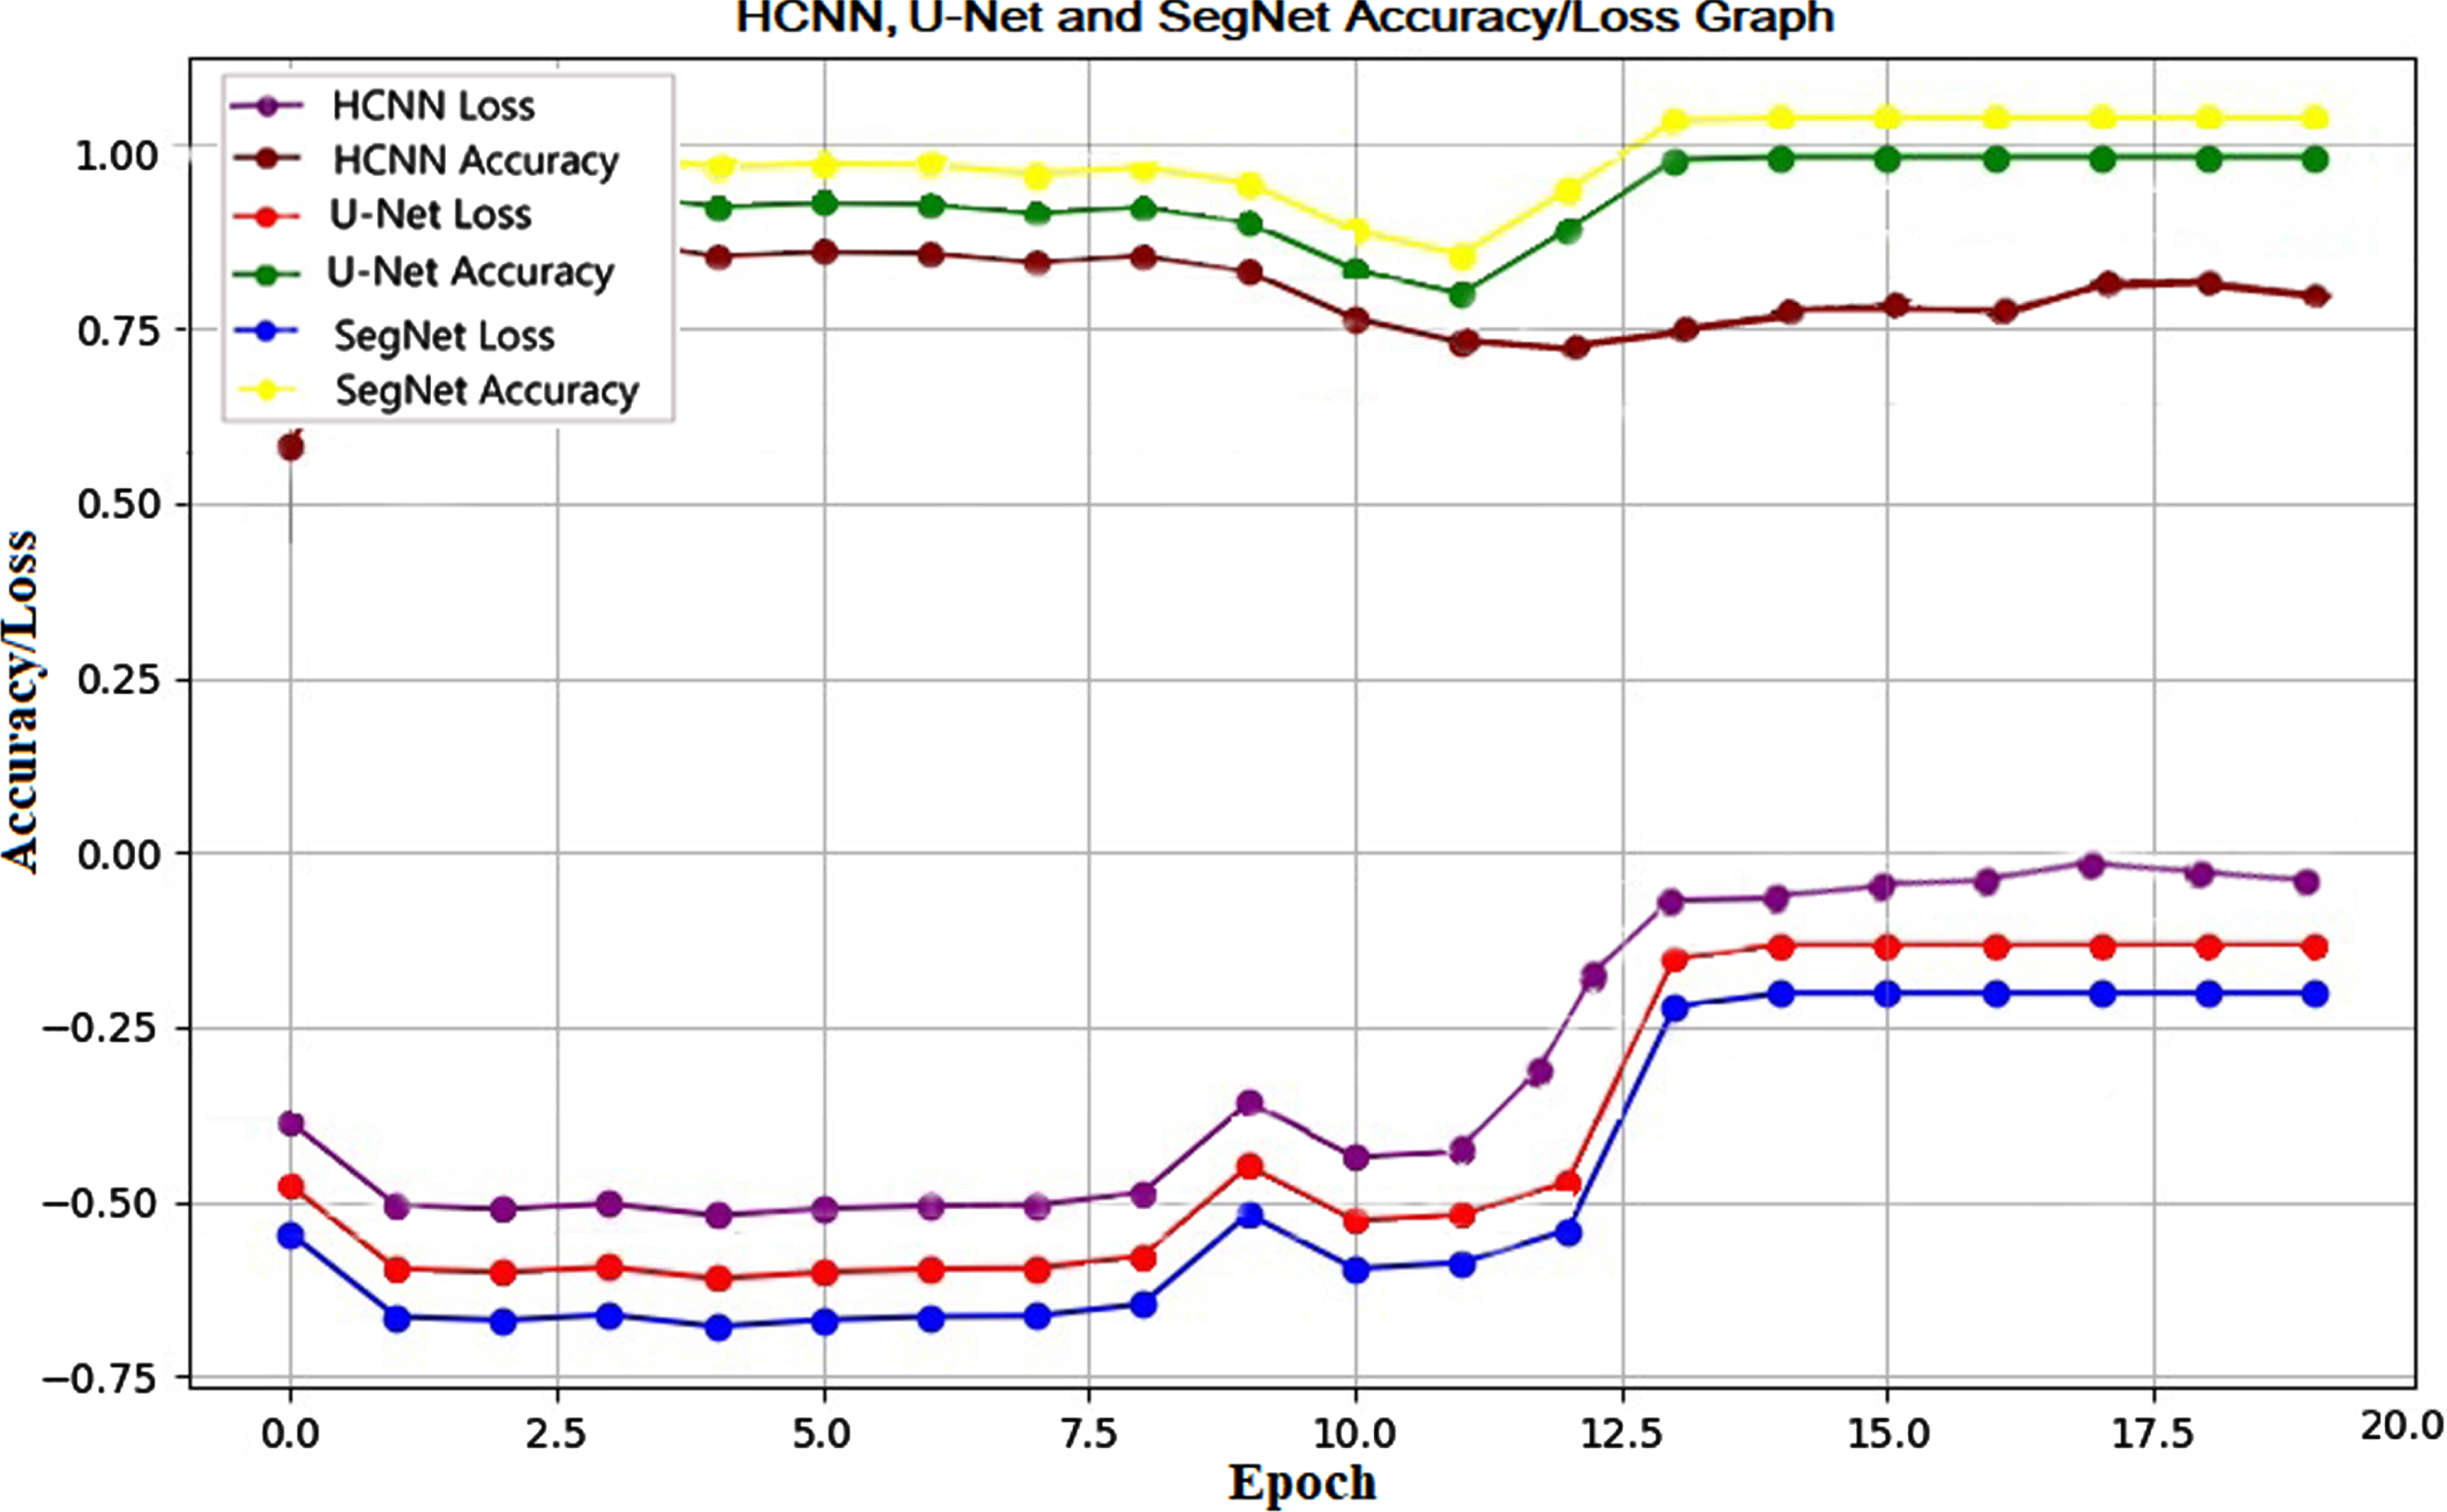 Hybrid CNN, U-Net, and SegNet Accuracy/Loss graph.